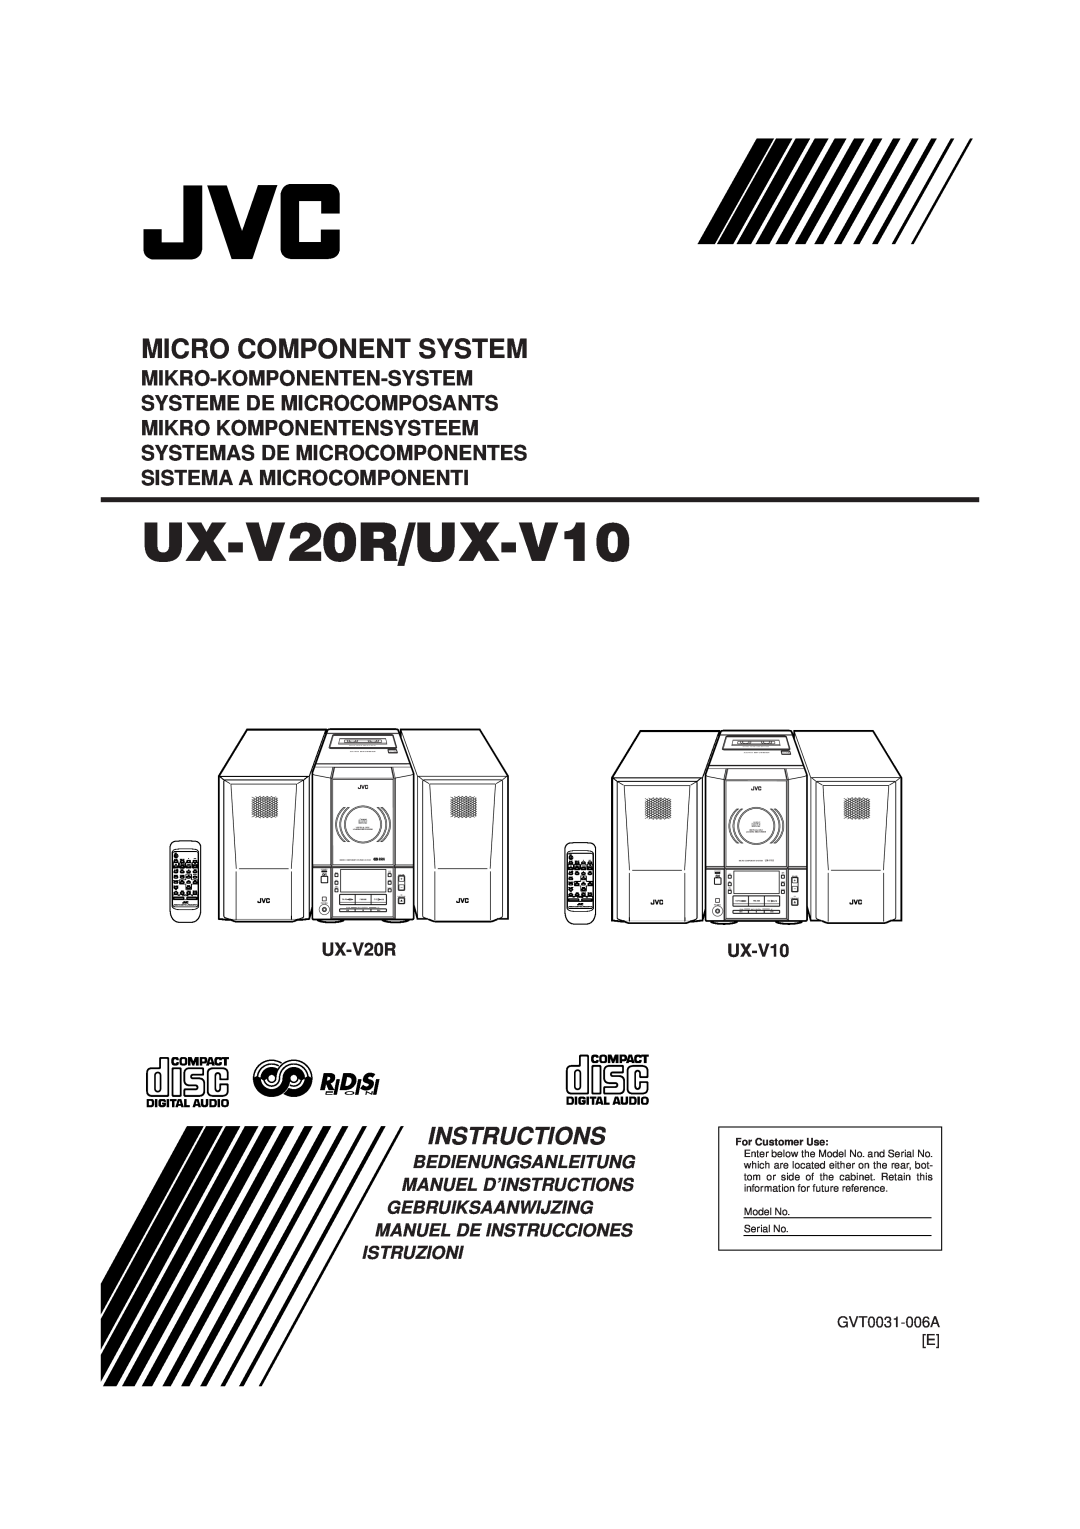 JVC manual Bedienungsanleitung Manuel D’Instructions, Istruzioni, UX-V20R/UX-V10, Micro Component System, Volume 